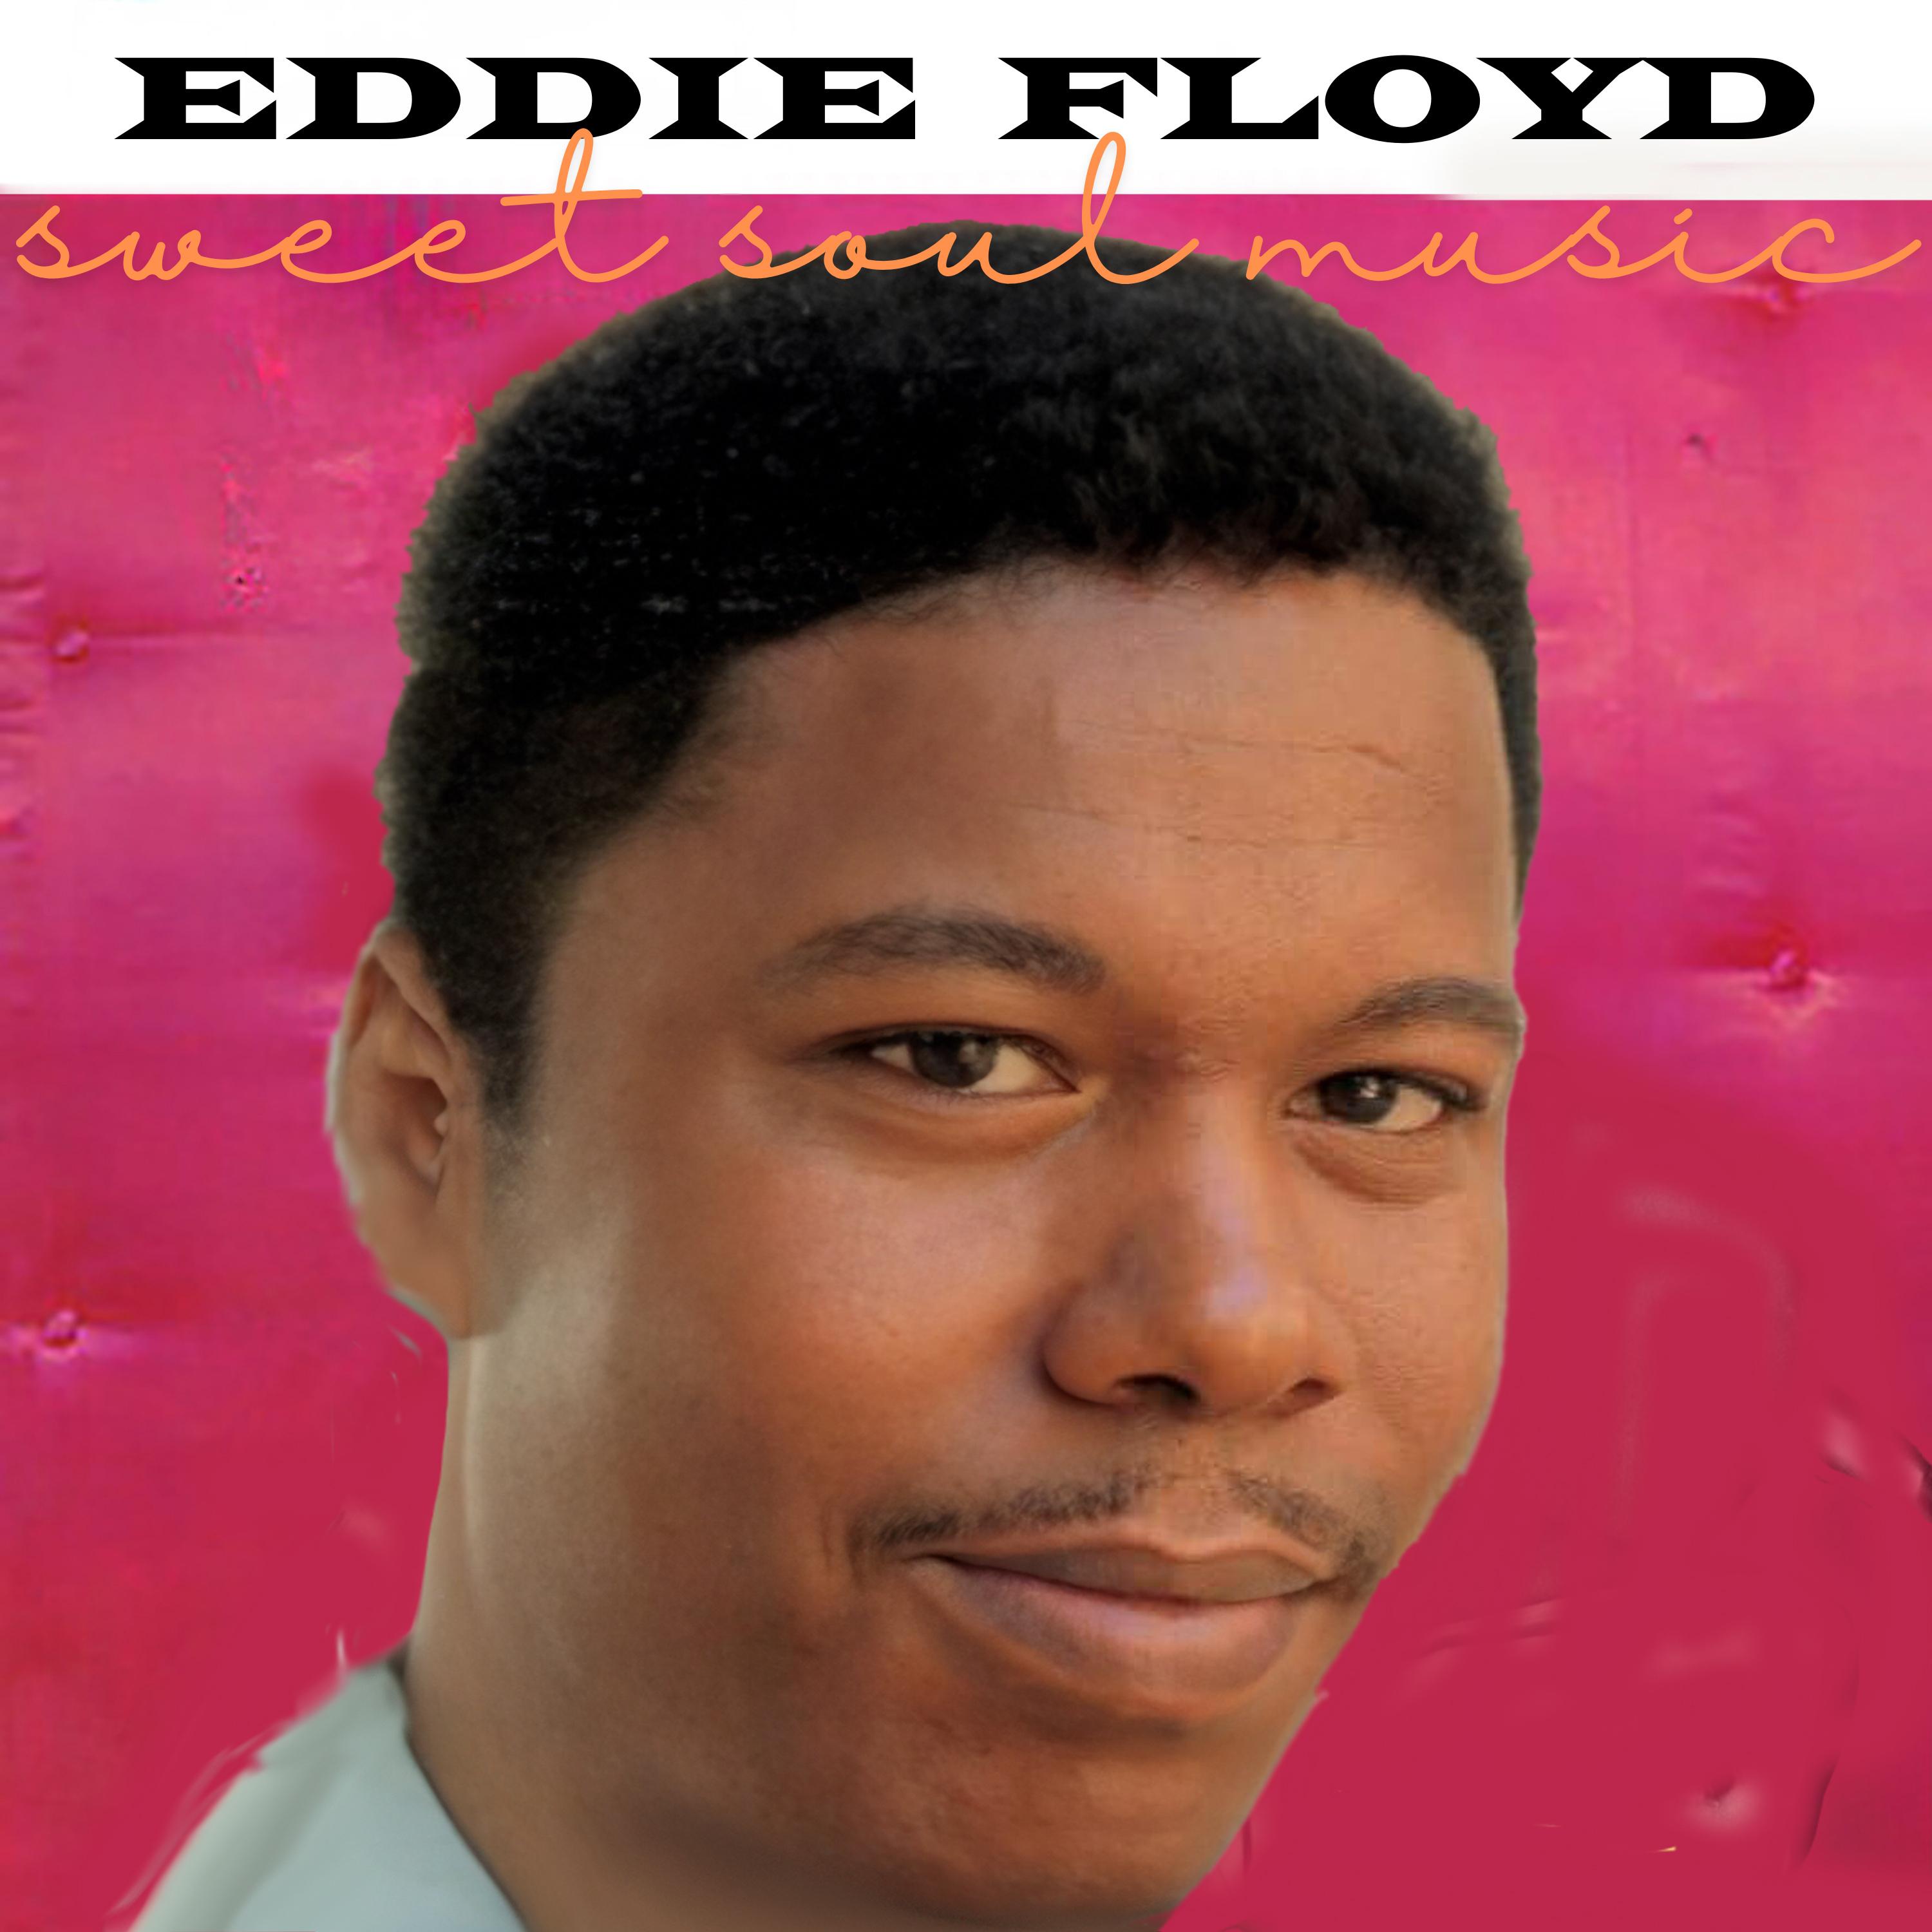 Eddie Floyd - I Got a Reason to Smile (Cause I've Got You)